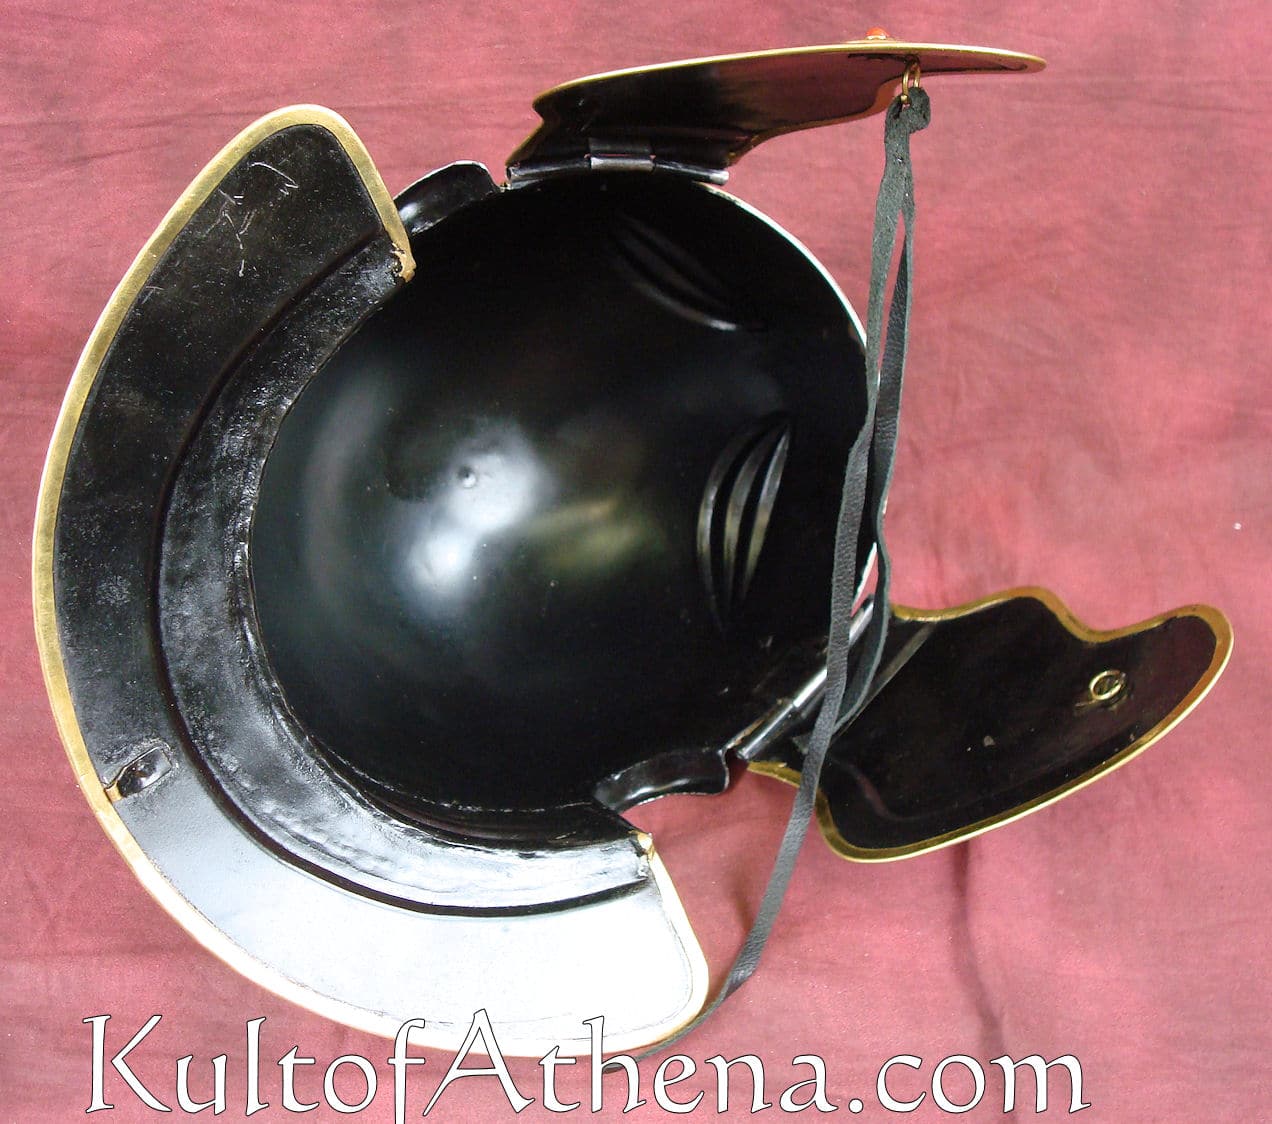 Imperial Roman Gallic Helmet - 18 Gauge Steel